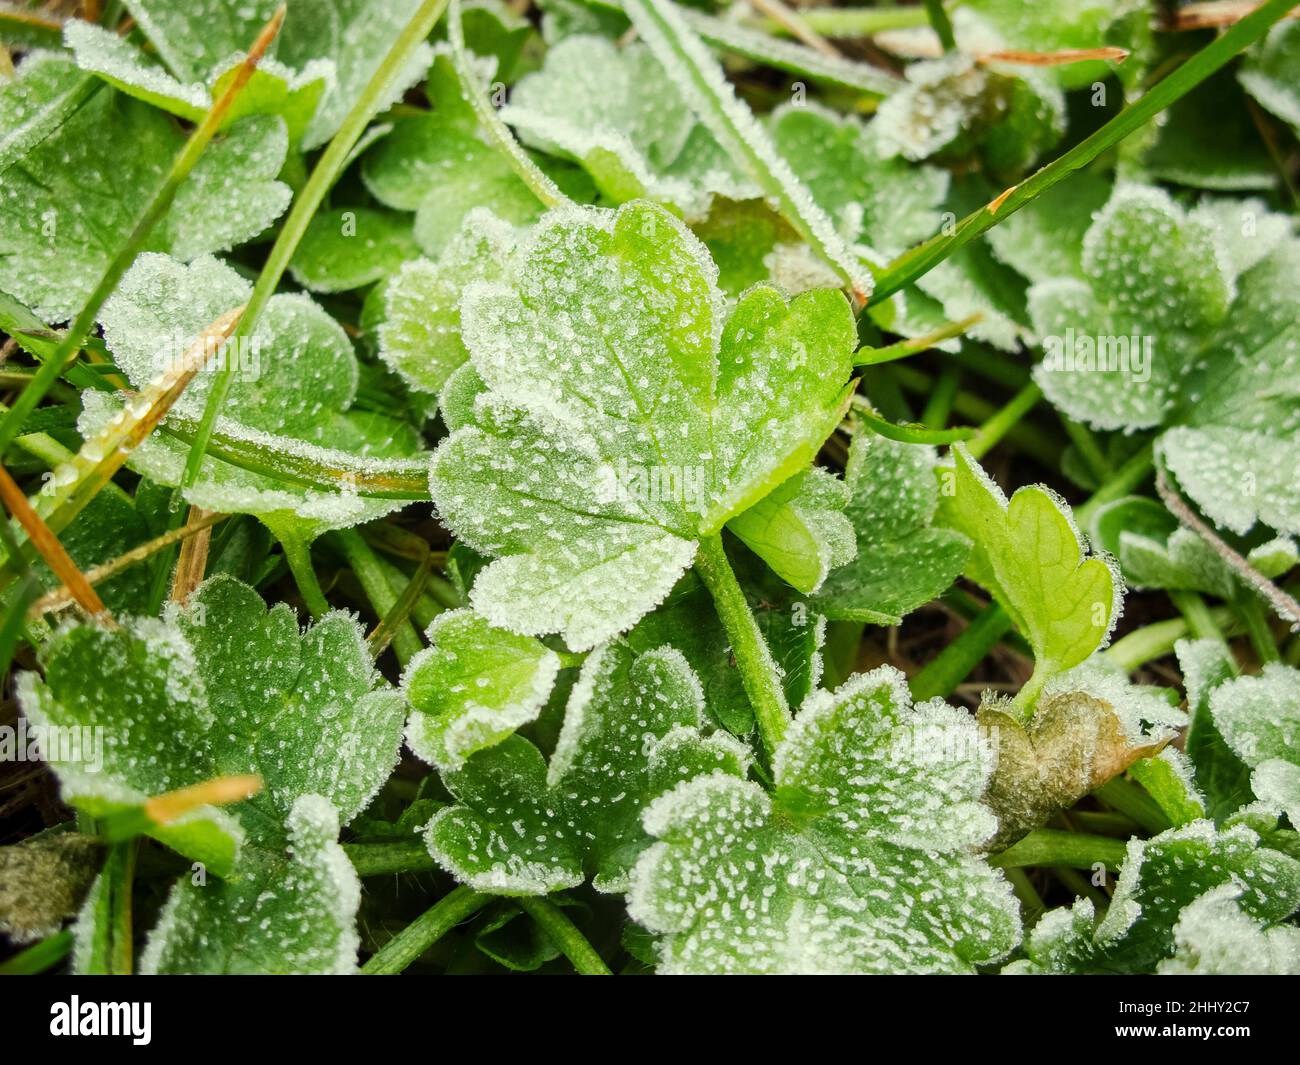 Frozen green leafs Stock Photo